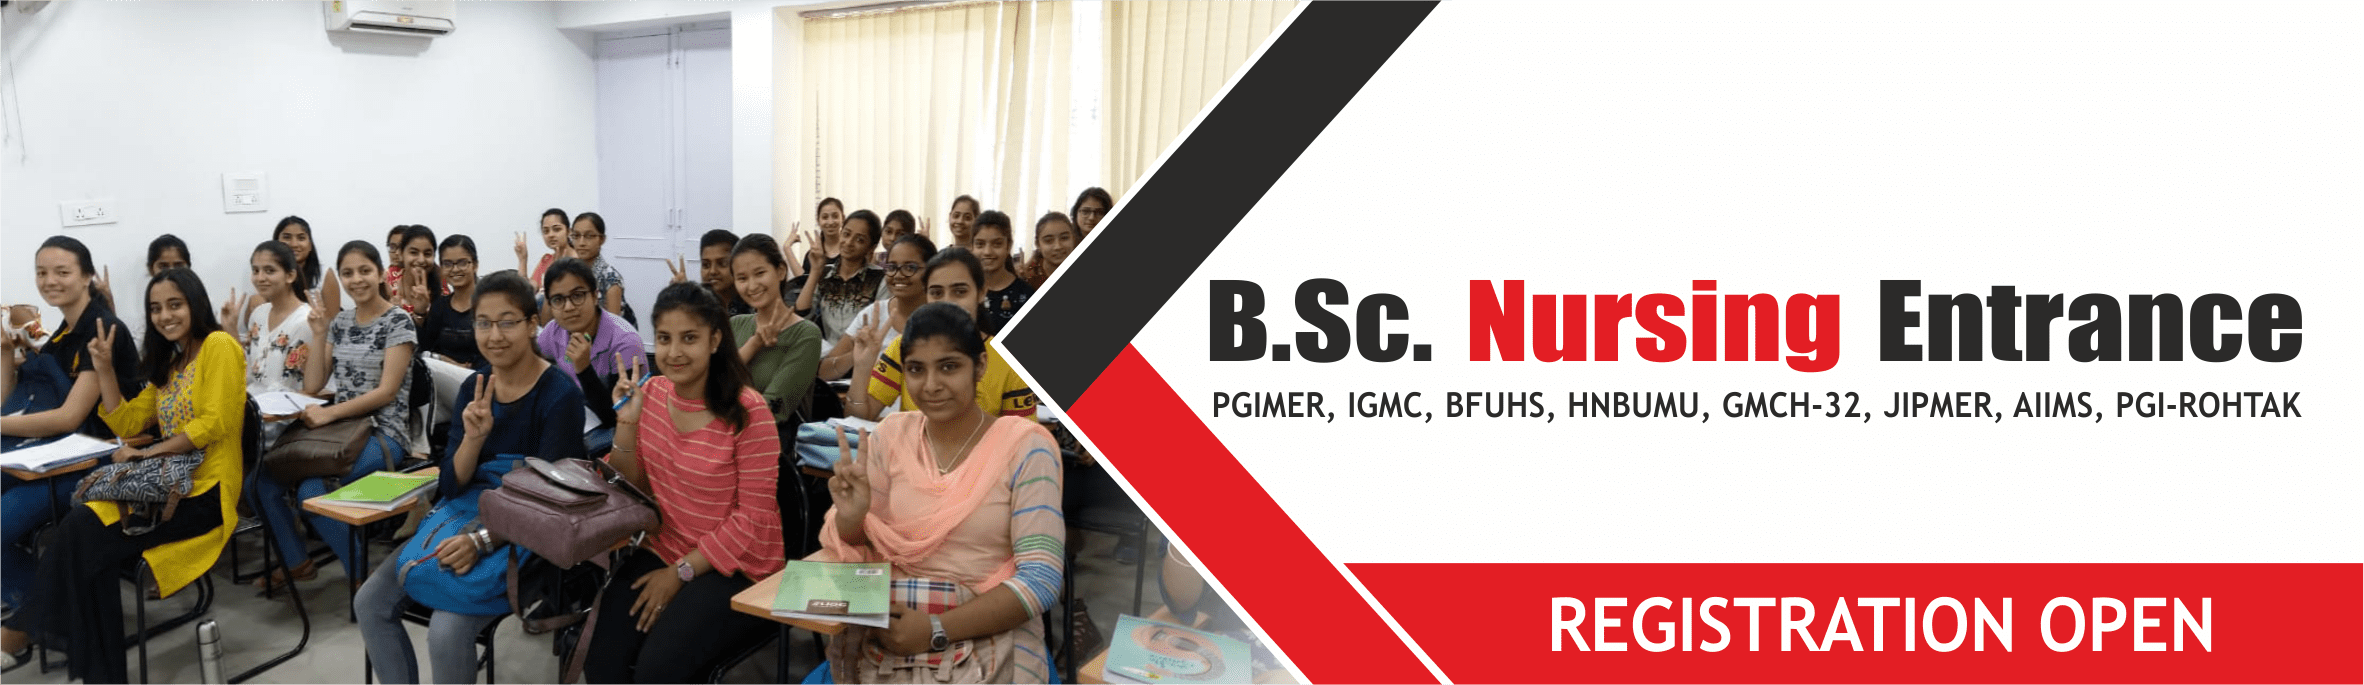 BSC NURSING ENTRANCE REGISTRATION OPEN